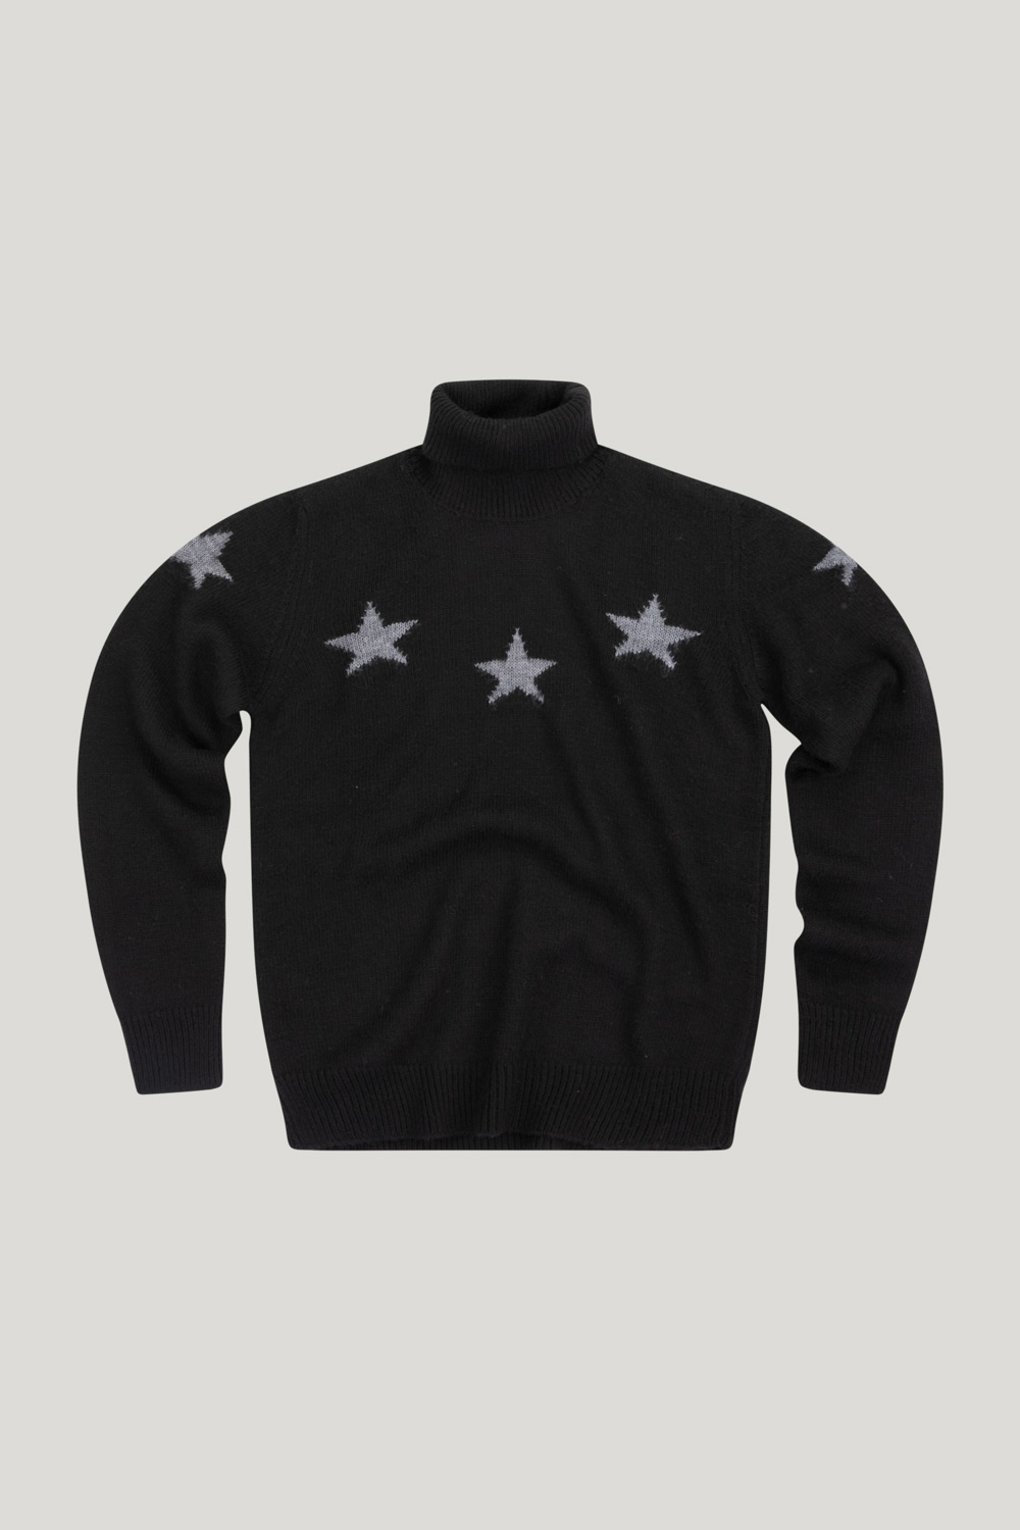 Turtleneck sweater with stars - Black